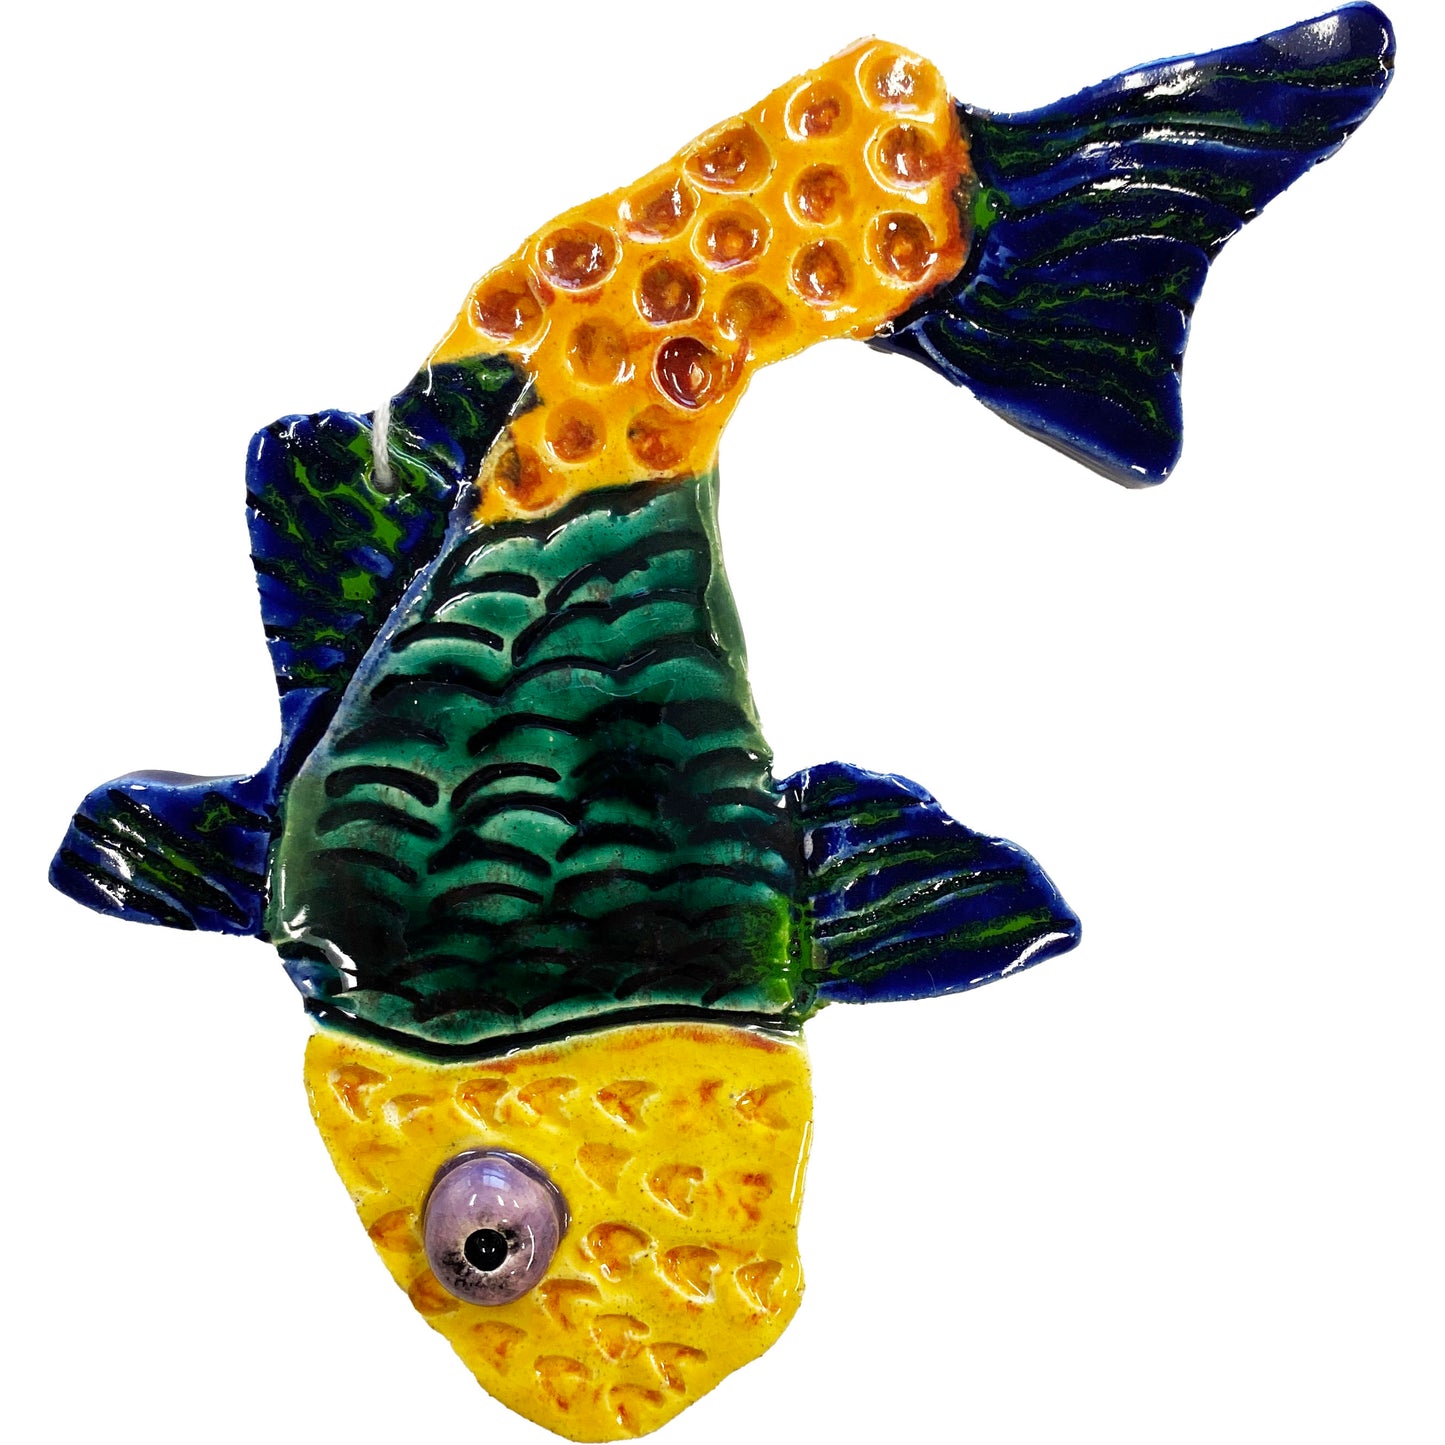 Ceramic Arts Handmade Clay Crafts Fresh Fish Glazed 6.5-inch x 6-inch Koi made by Izzy Terry